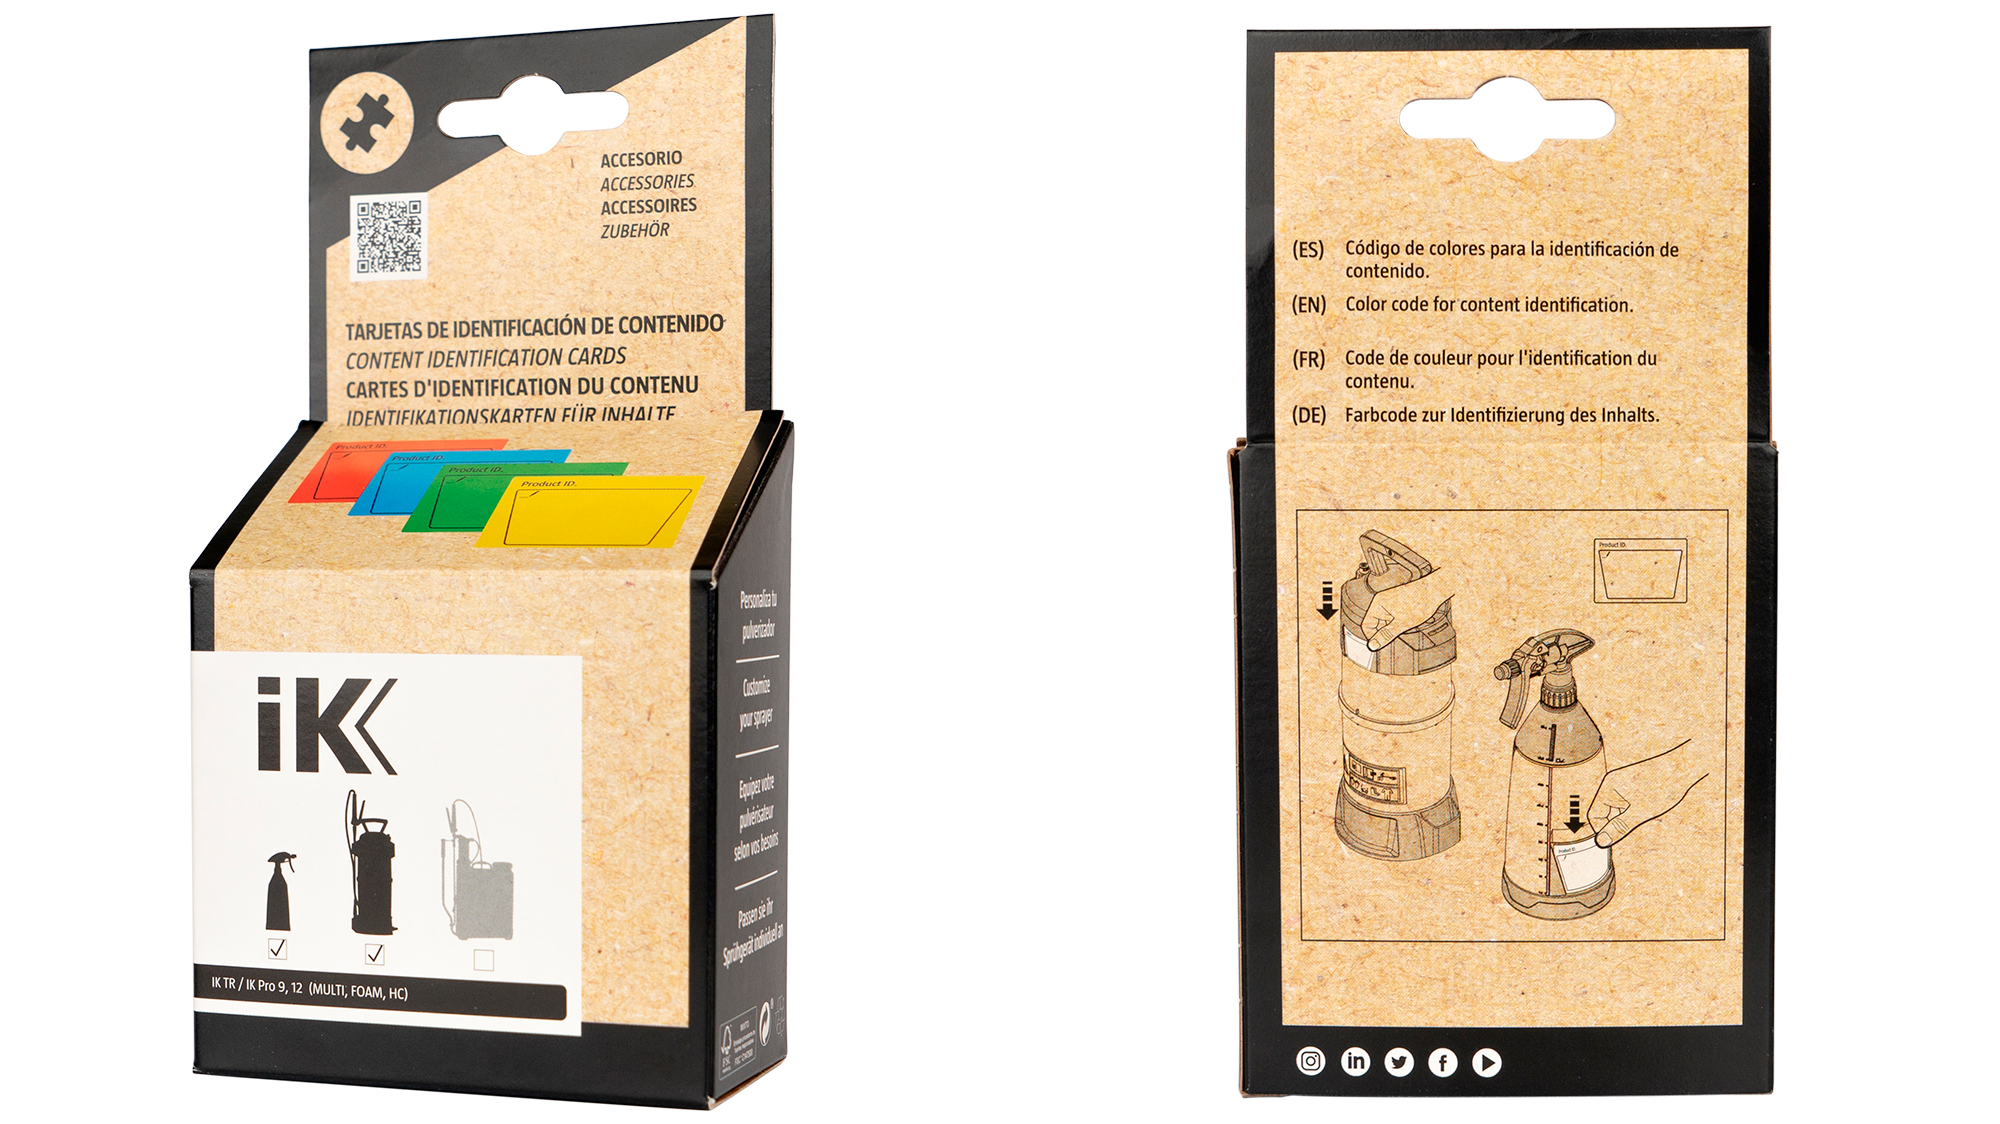 IK Sprayer Identification Label - 10 Pack